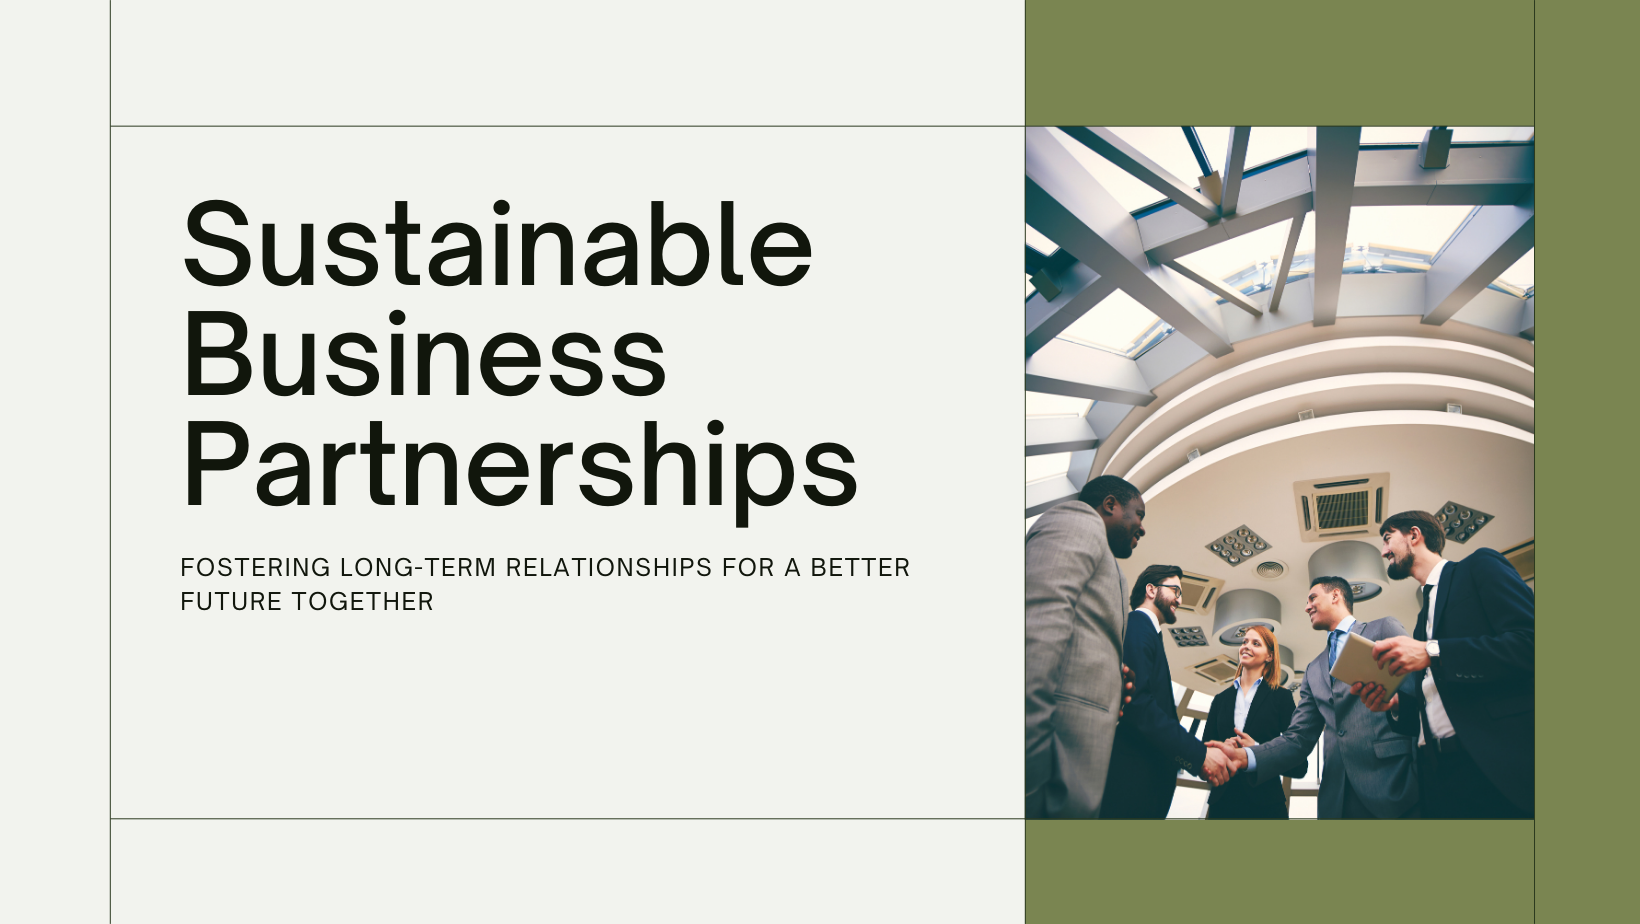 Business Partnerships